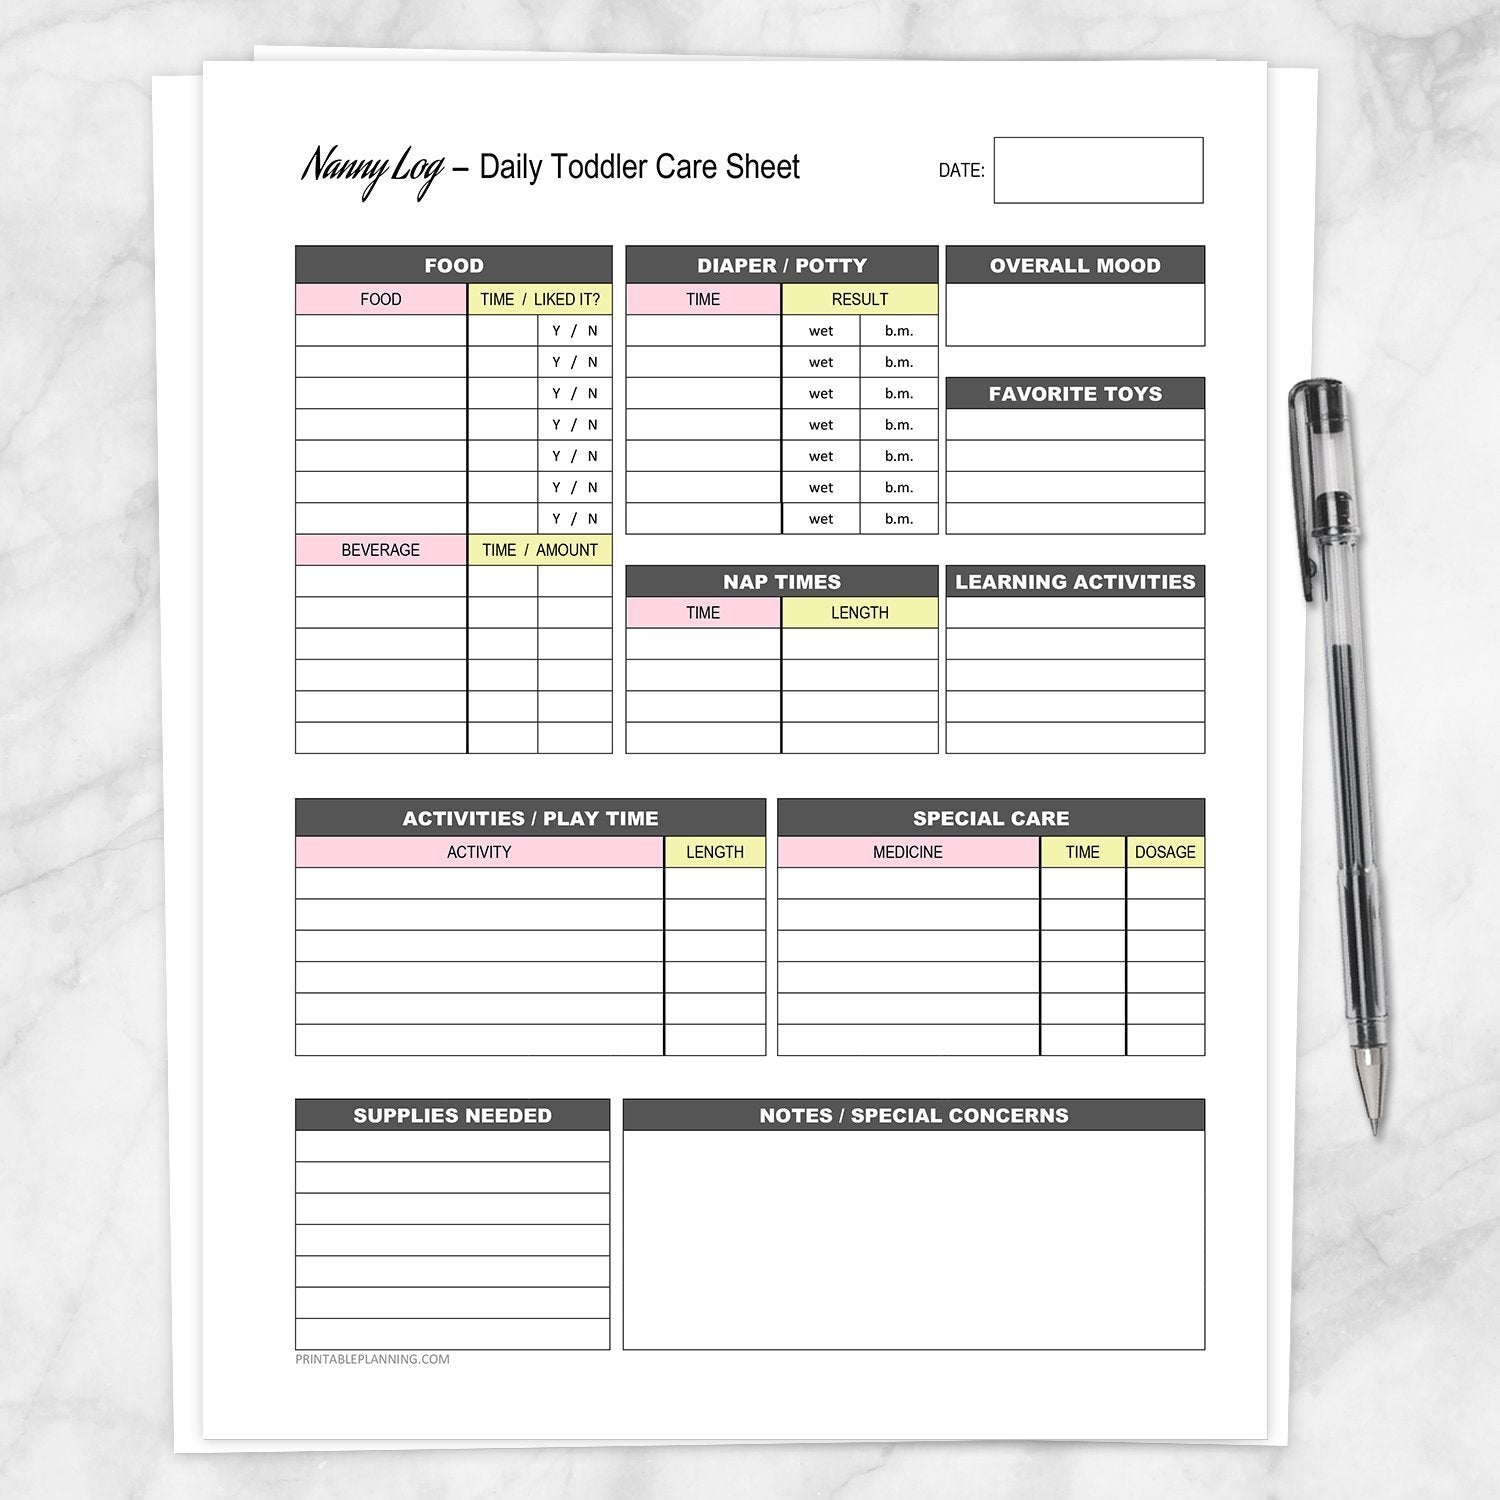 Printable Nanny Log - Daily Toddler Care Sheet - Pink and Yellow at Printable Planning